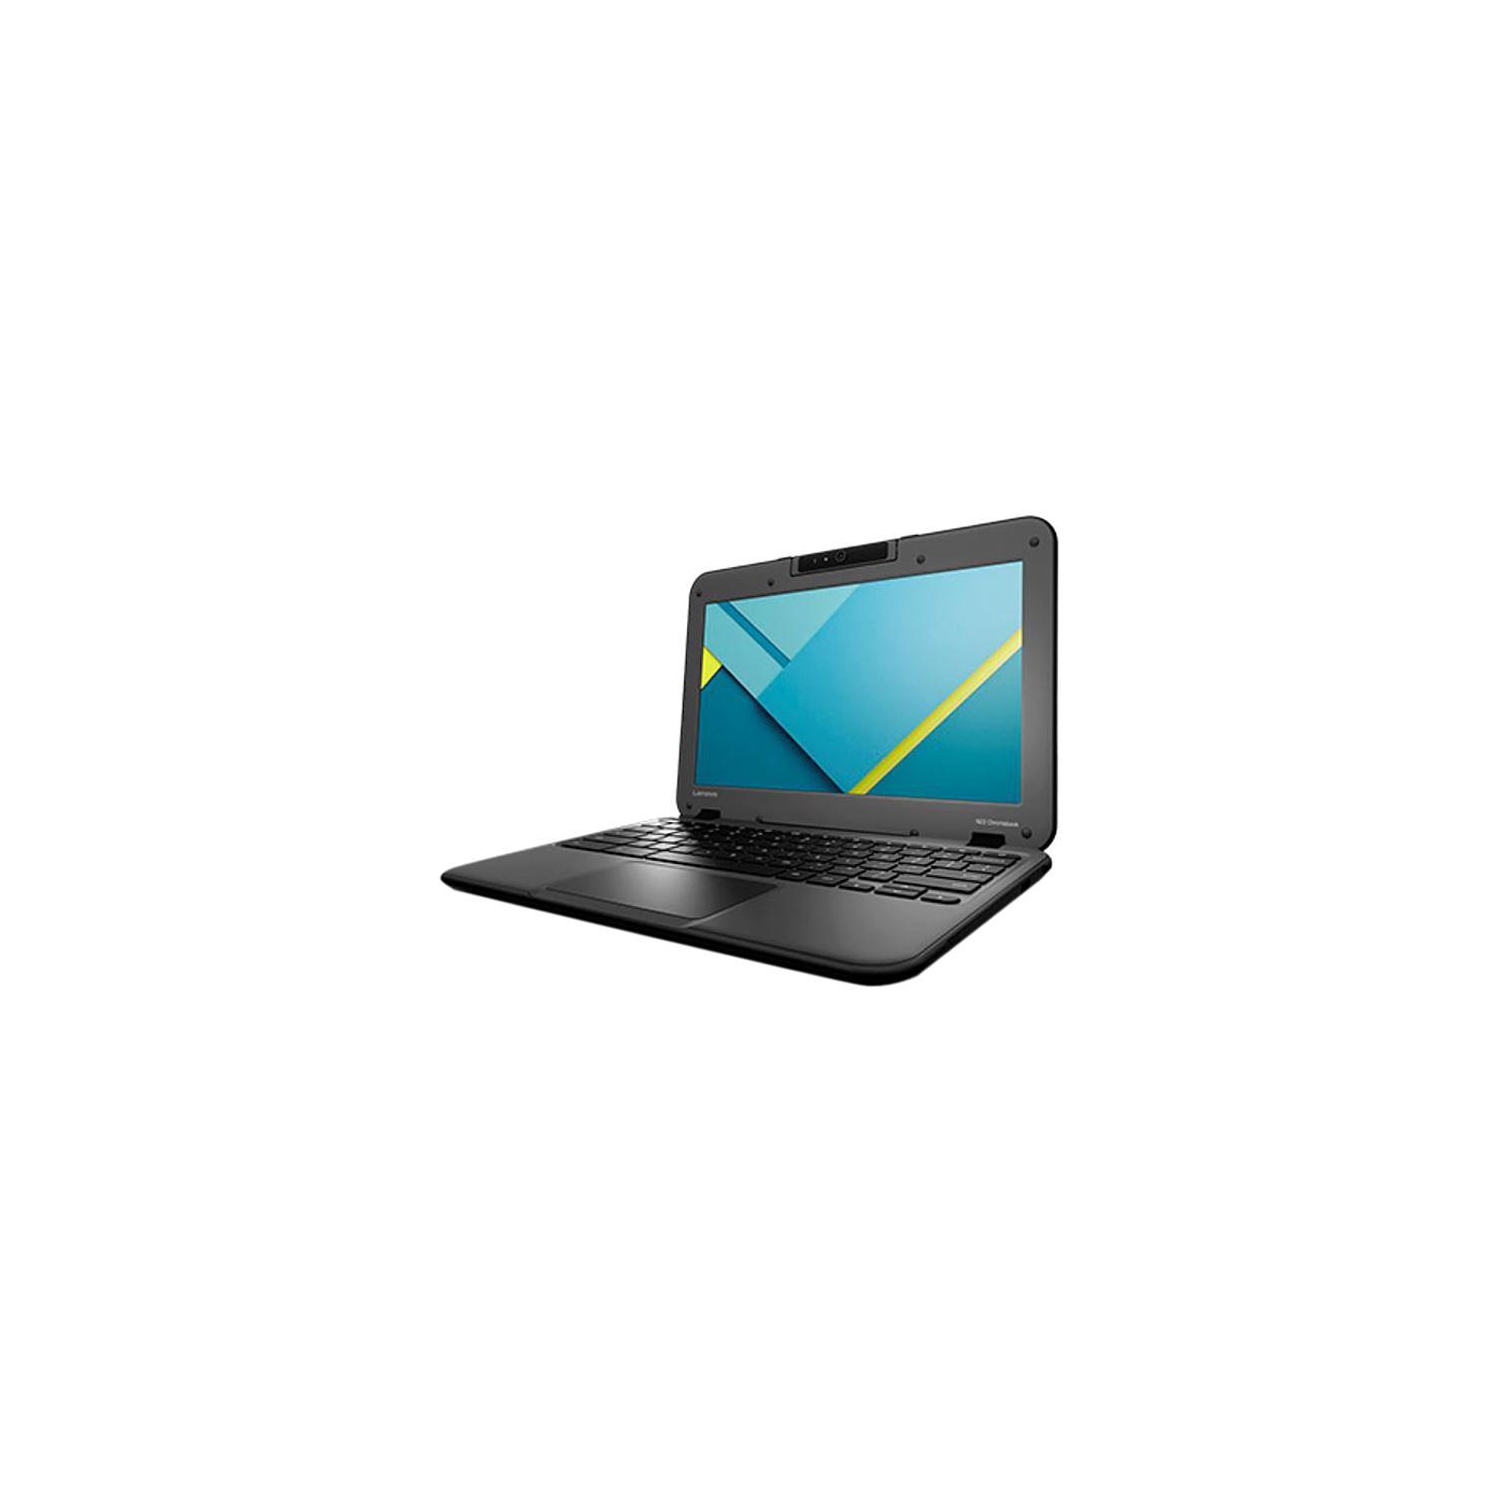 Refurbished (Excellent) - Lenovo Chromebook N22 11.6" Intel Celeron N3060 2GB 16GB SSD - Black